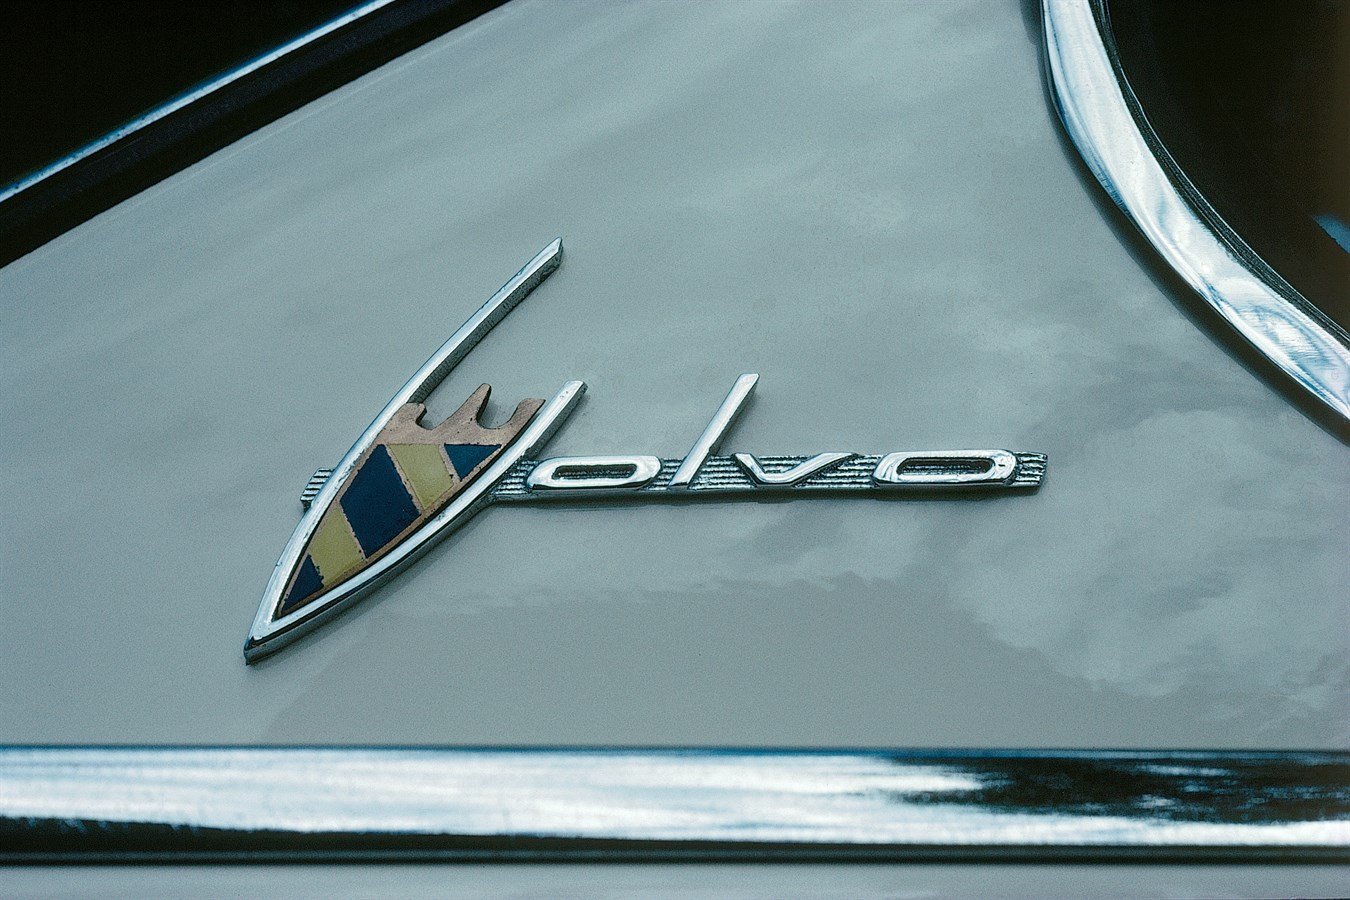 VOLVO P1800/1800 (1961-1972) - Volvo Car USA Newsroom